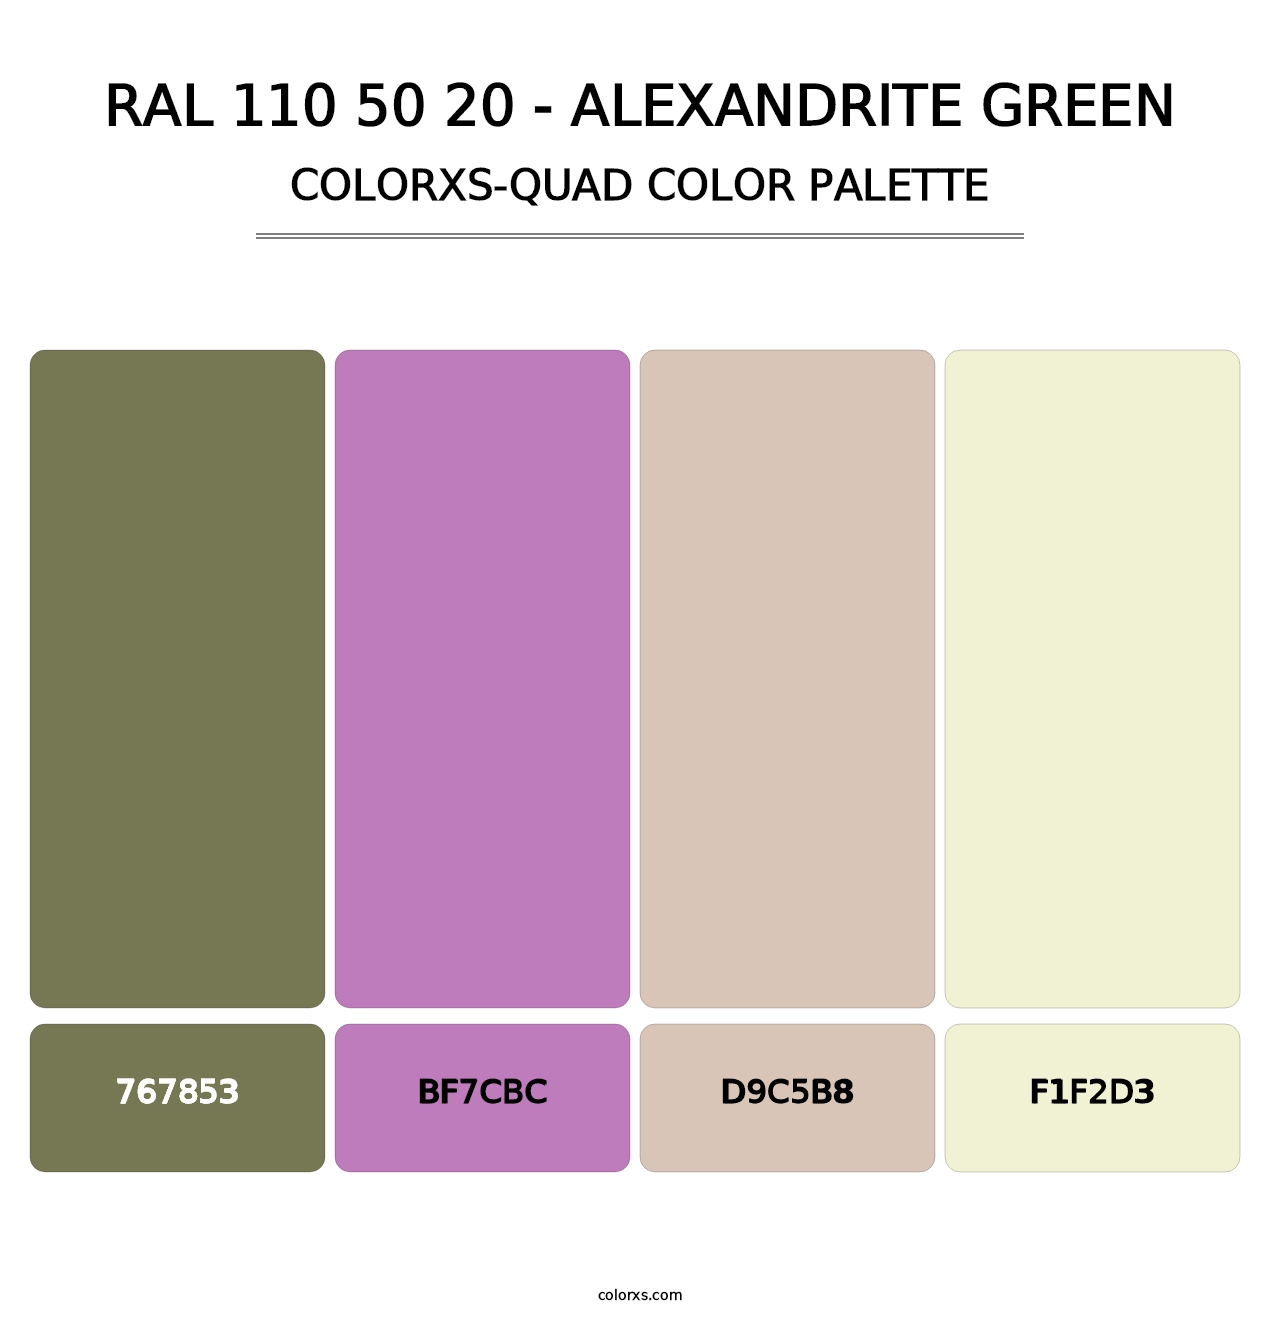 RAL 110 50 20 - Alexandrite Green - Colorxs Quad Palette